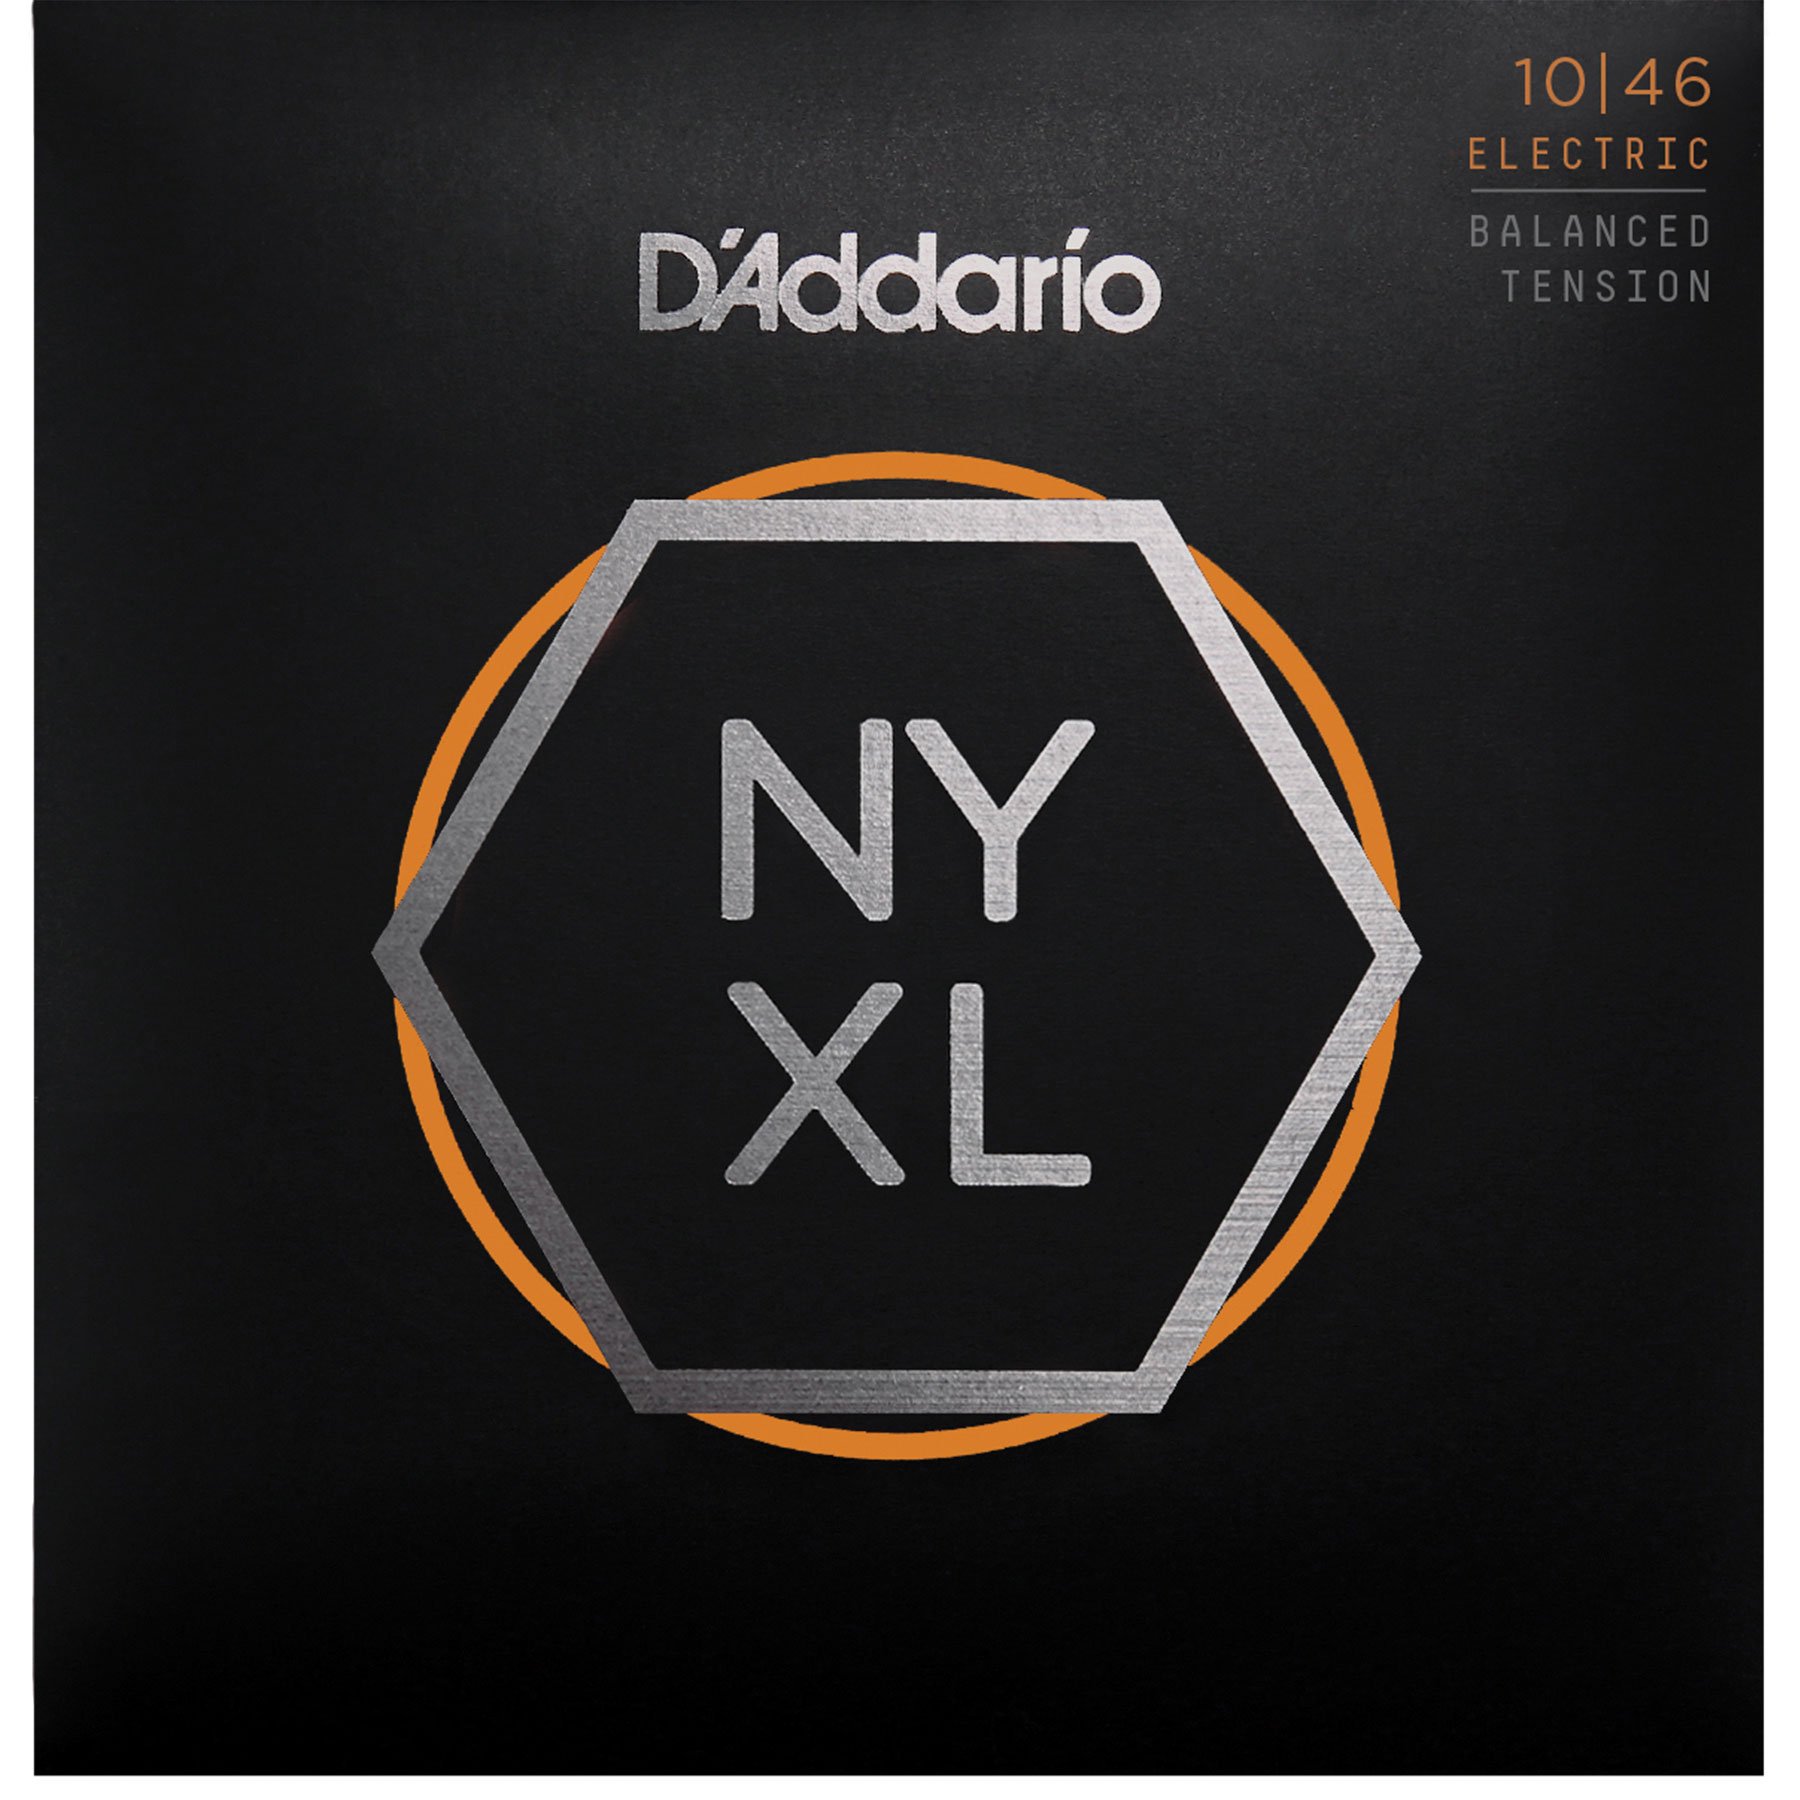 D'Addario NYXL Nickel Wound Balanced Tension Electric Guitar Strings